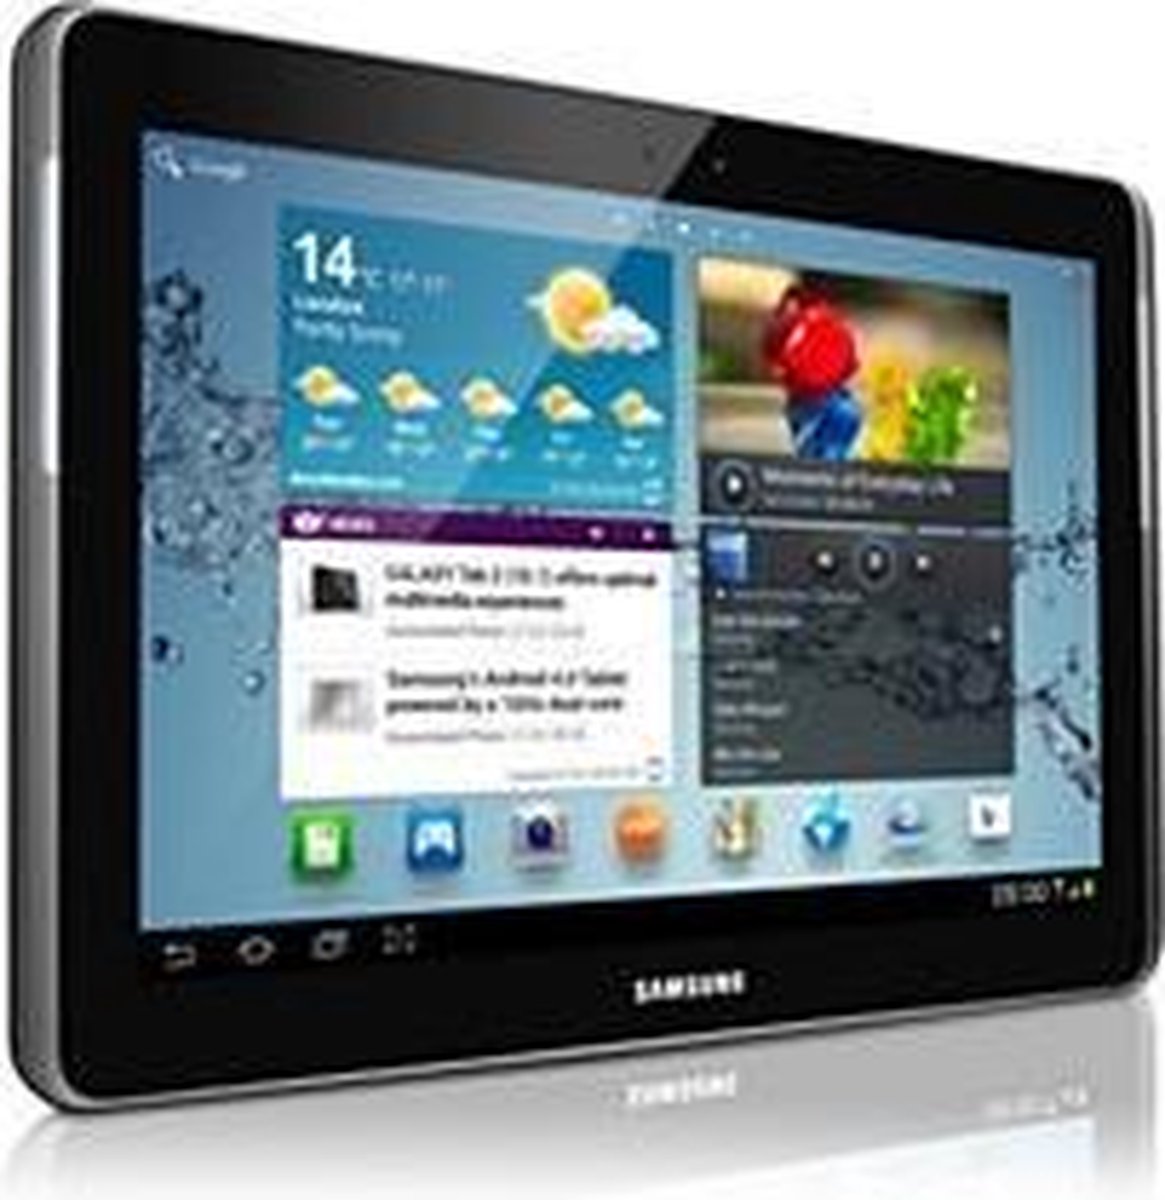 regeren Onzorgvuldigheid En team Samsung Galaxy Tab 2 10.1 (P5110) - WiFi - 16GB - Grijs | bol.com